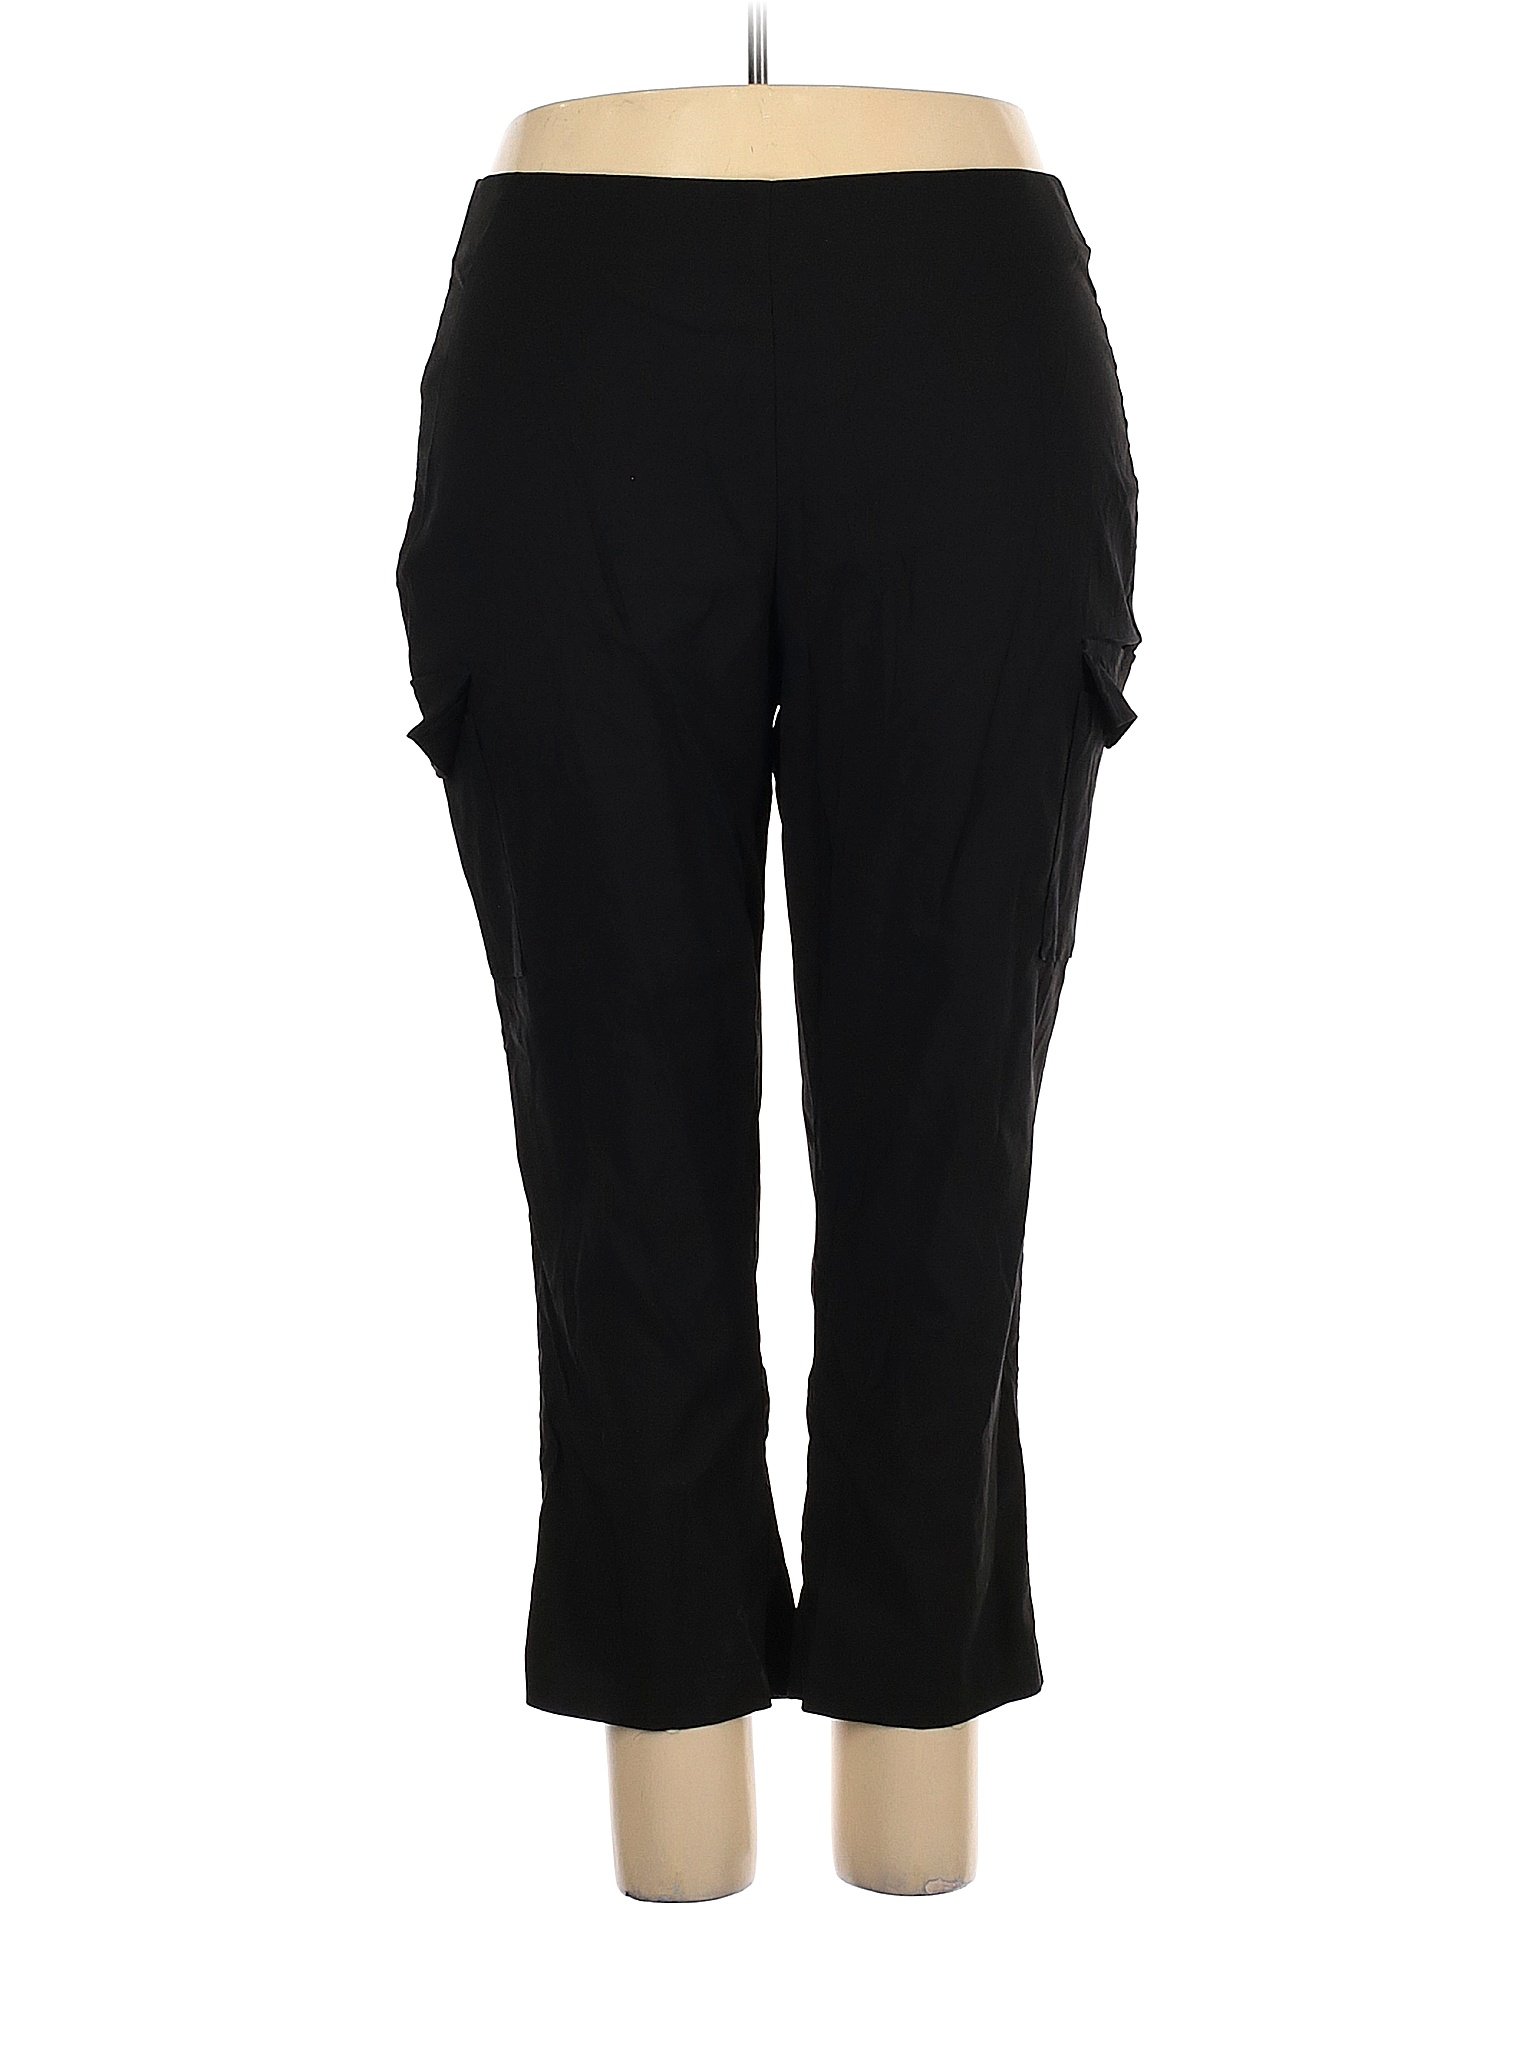 Ashley Stewart Solid Black Cargo Pants 23 Waist (Plus) - 85% off | thredUP